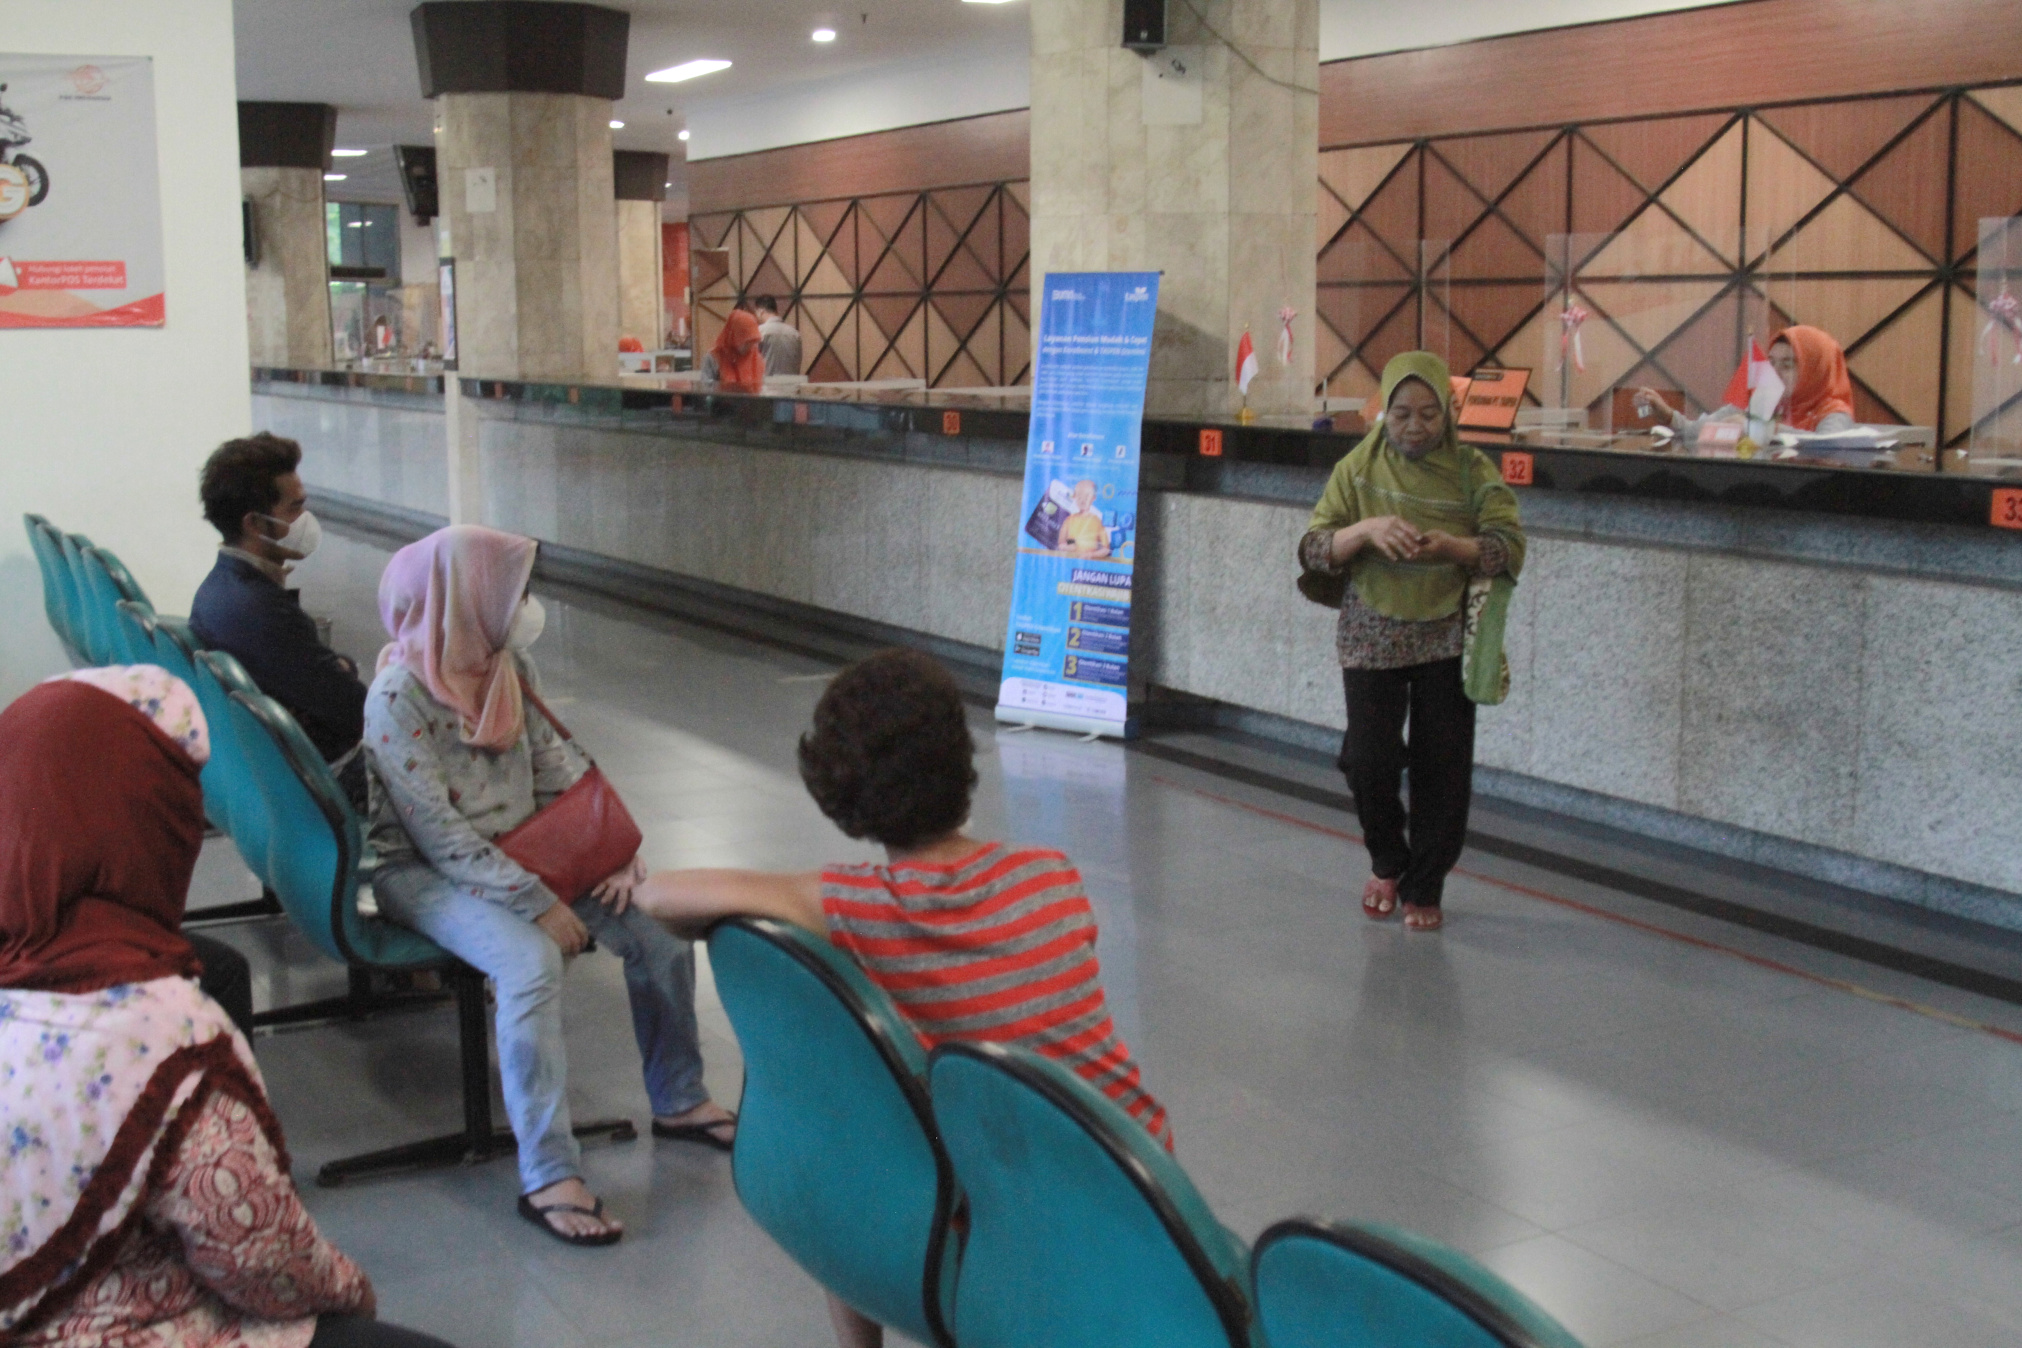 BLT BBM warga Jakarta sudah bisa diambil di kantor pos pasar baru (Ashar/SinPo.id)